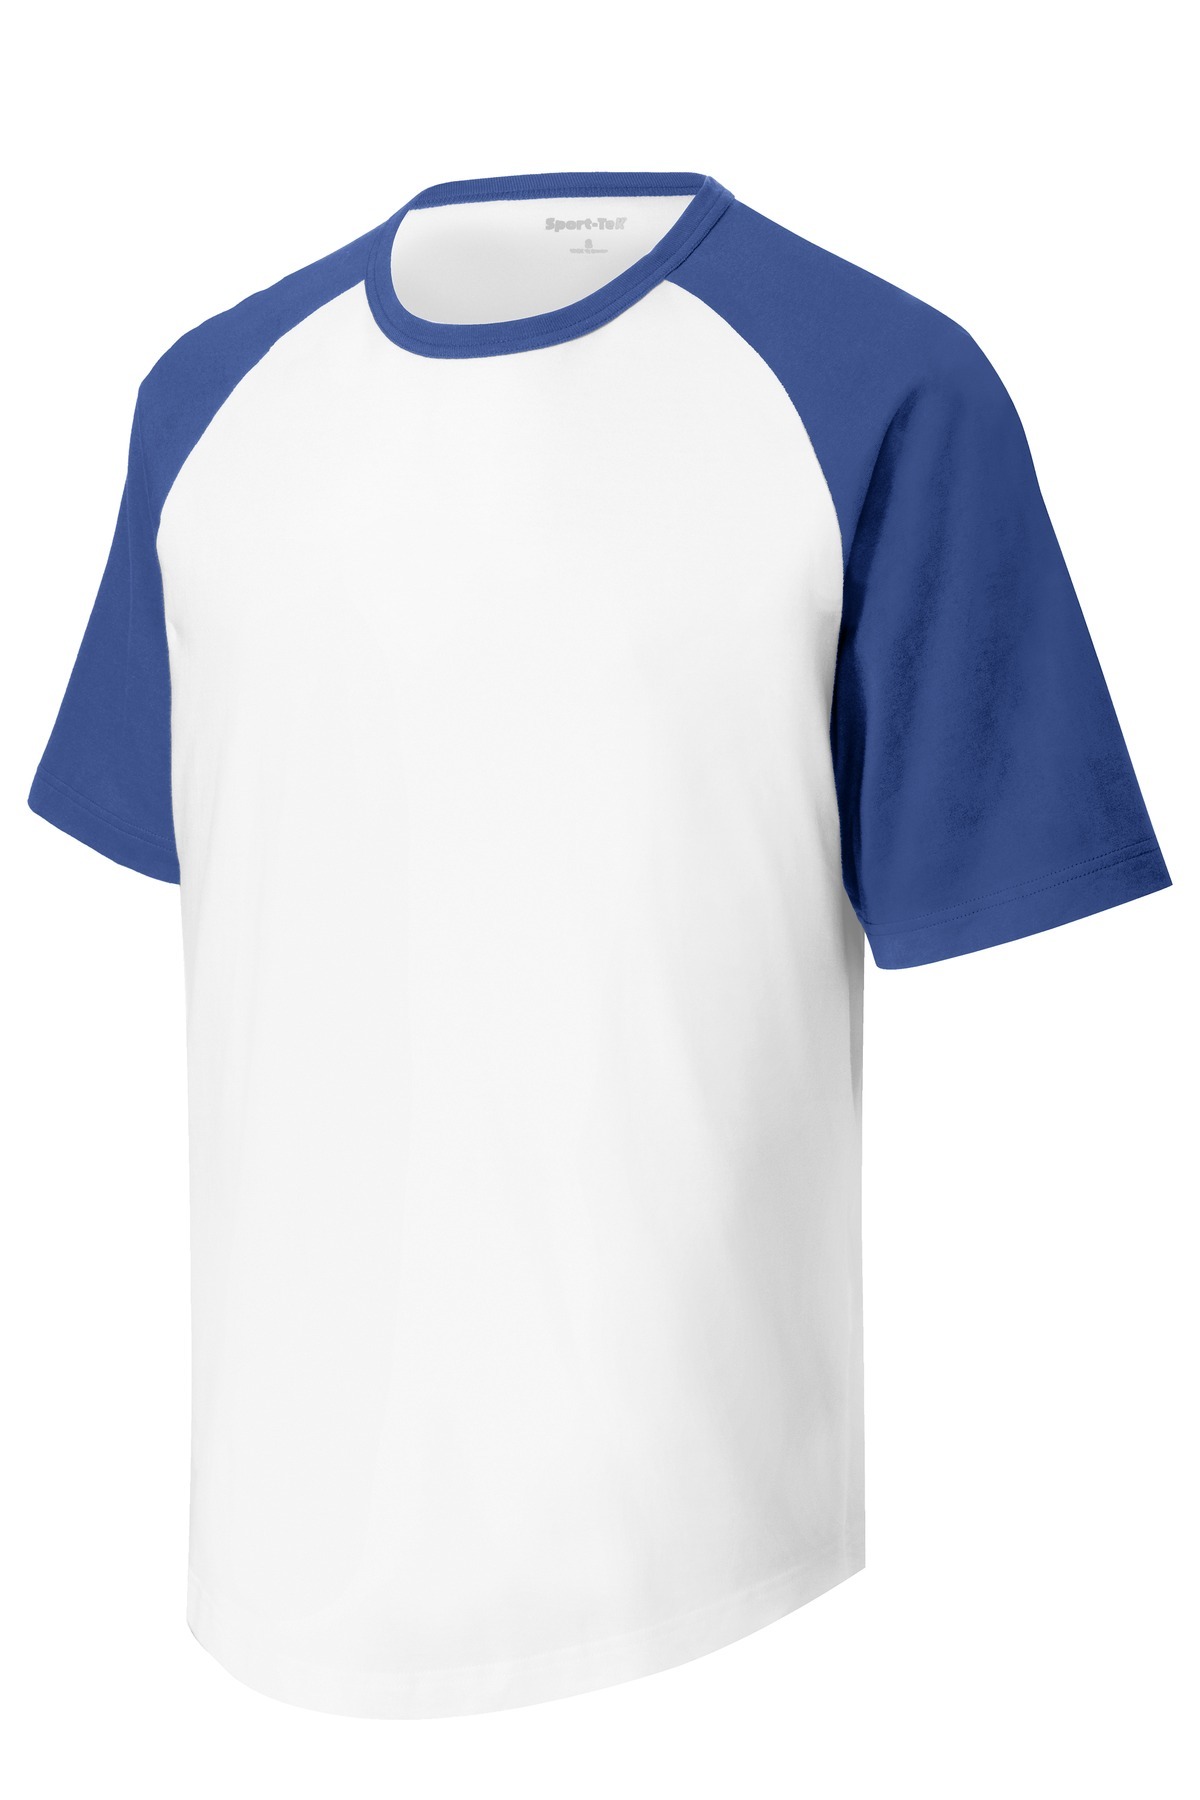 Sport-Tek Short Sleeve Colorblock Raglan Jersey | Product | SanMar